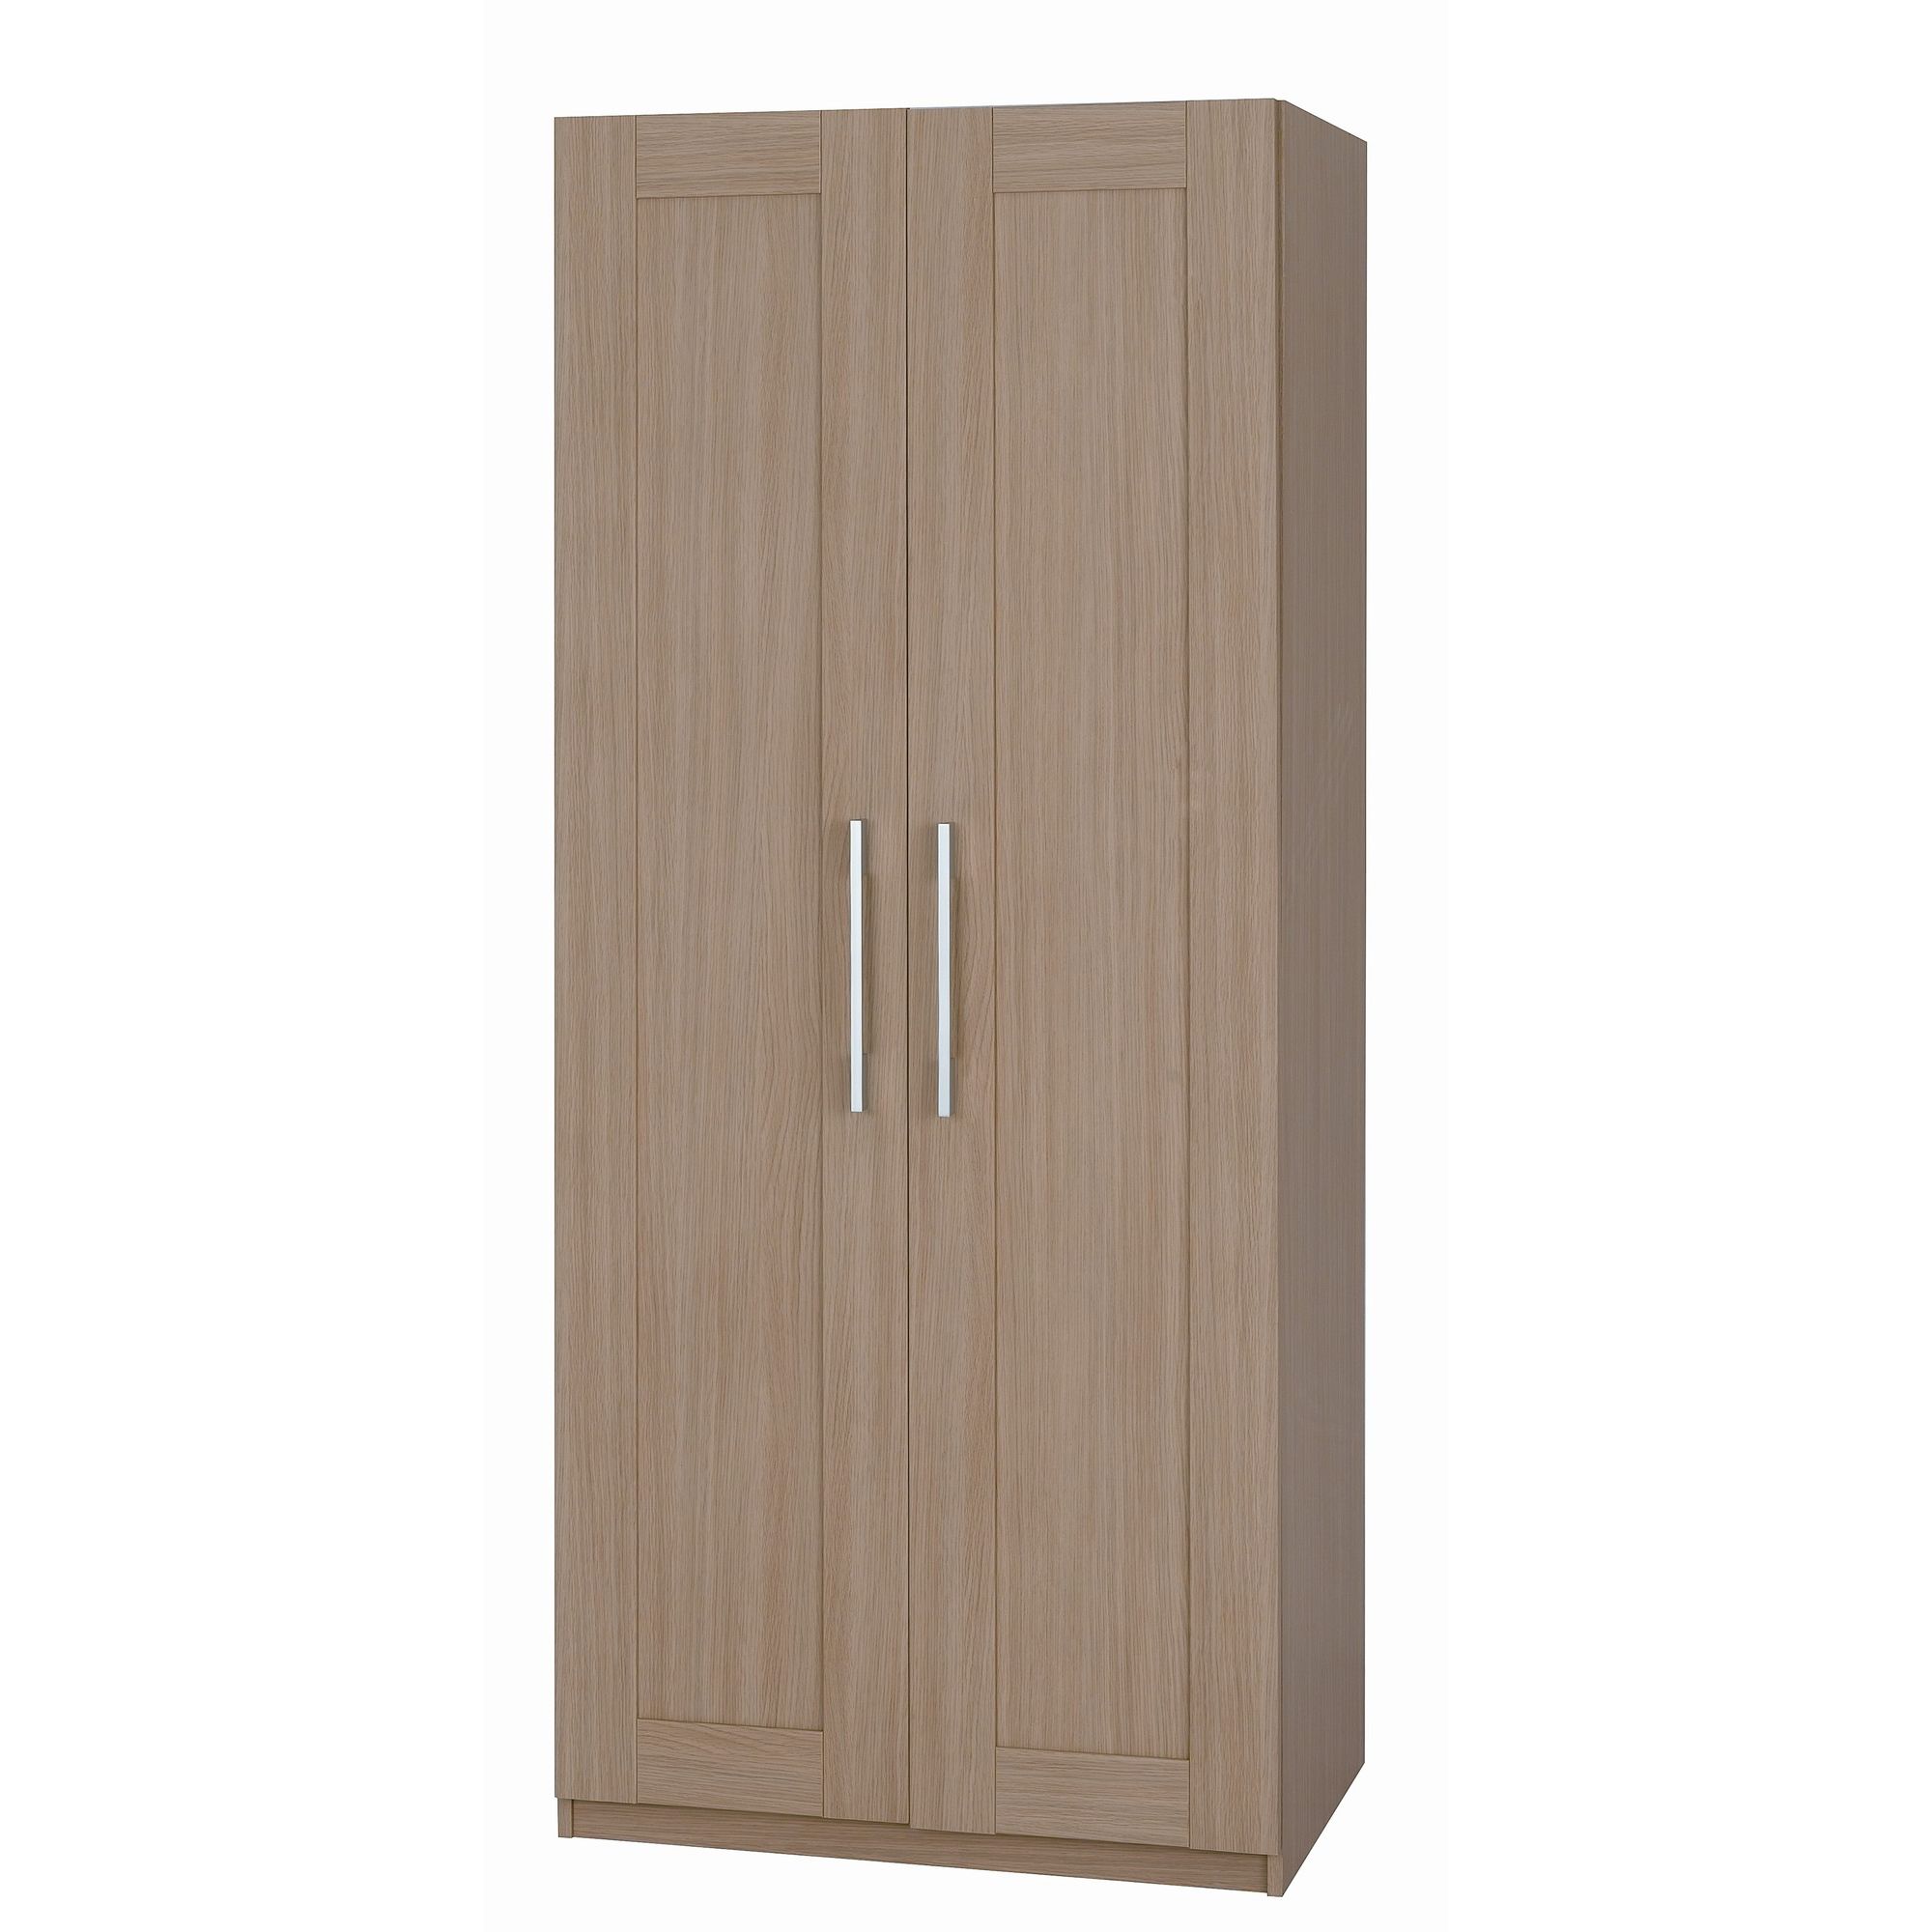 Alto Furniture Visualise Shaker Two Door Wardrobe in Veradi Oak at Tescos Direct